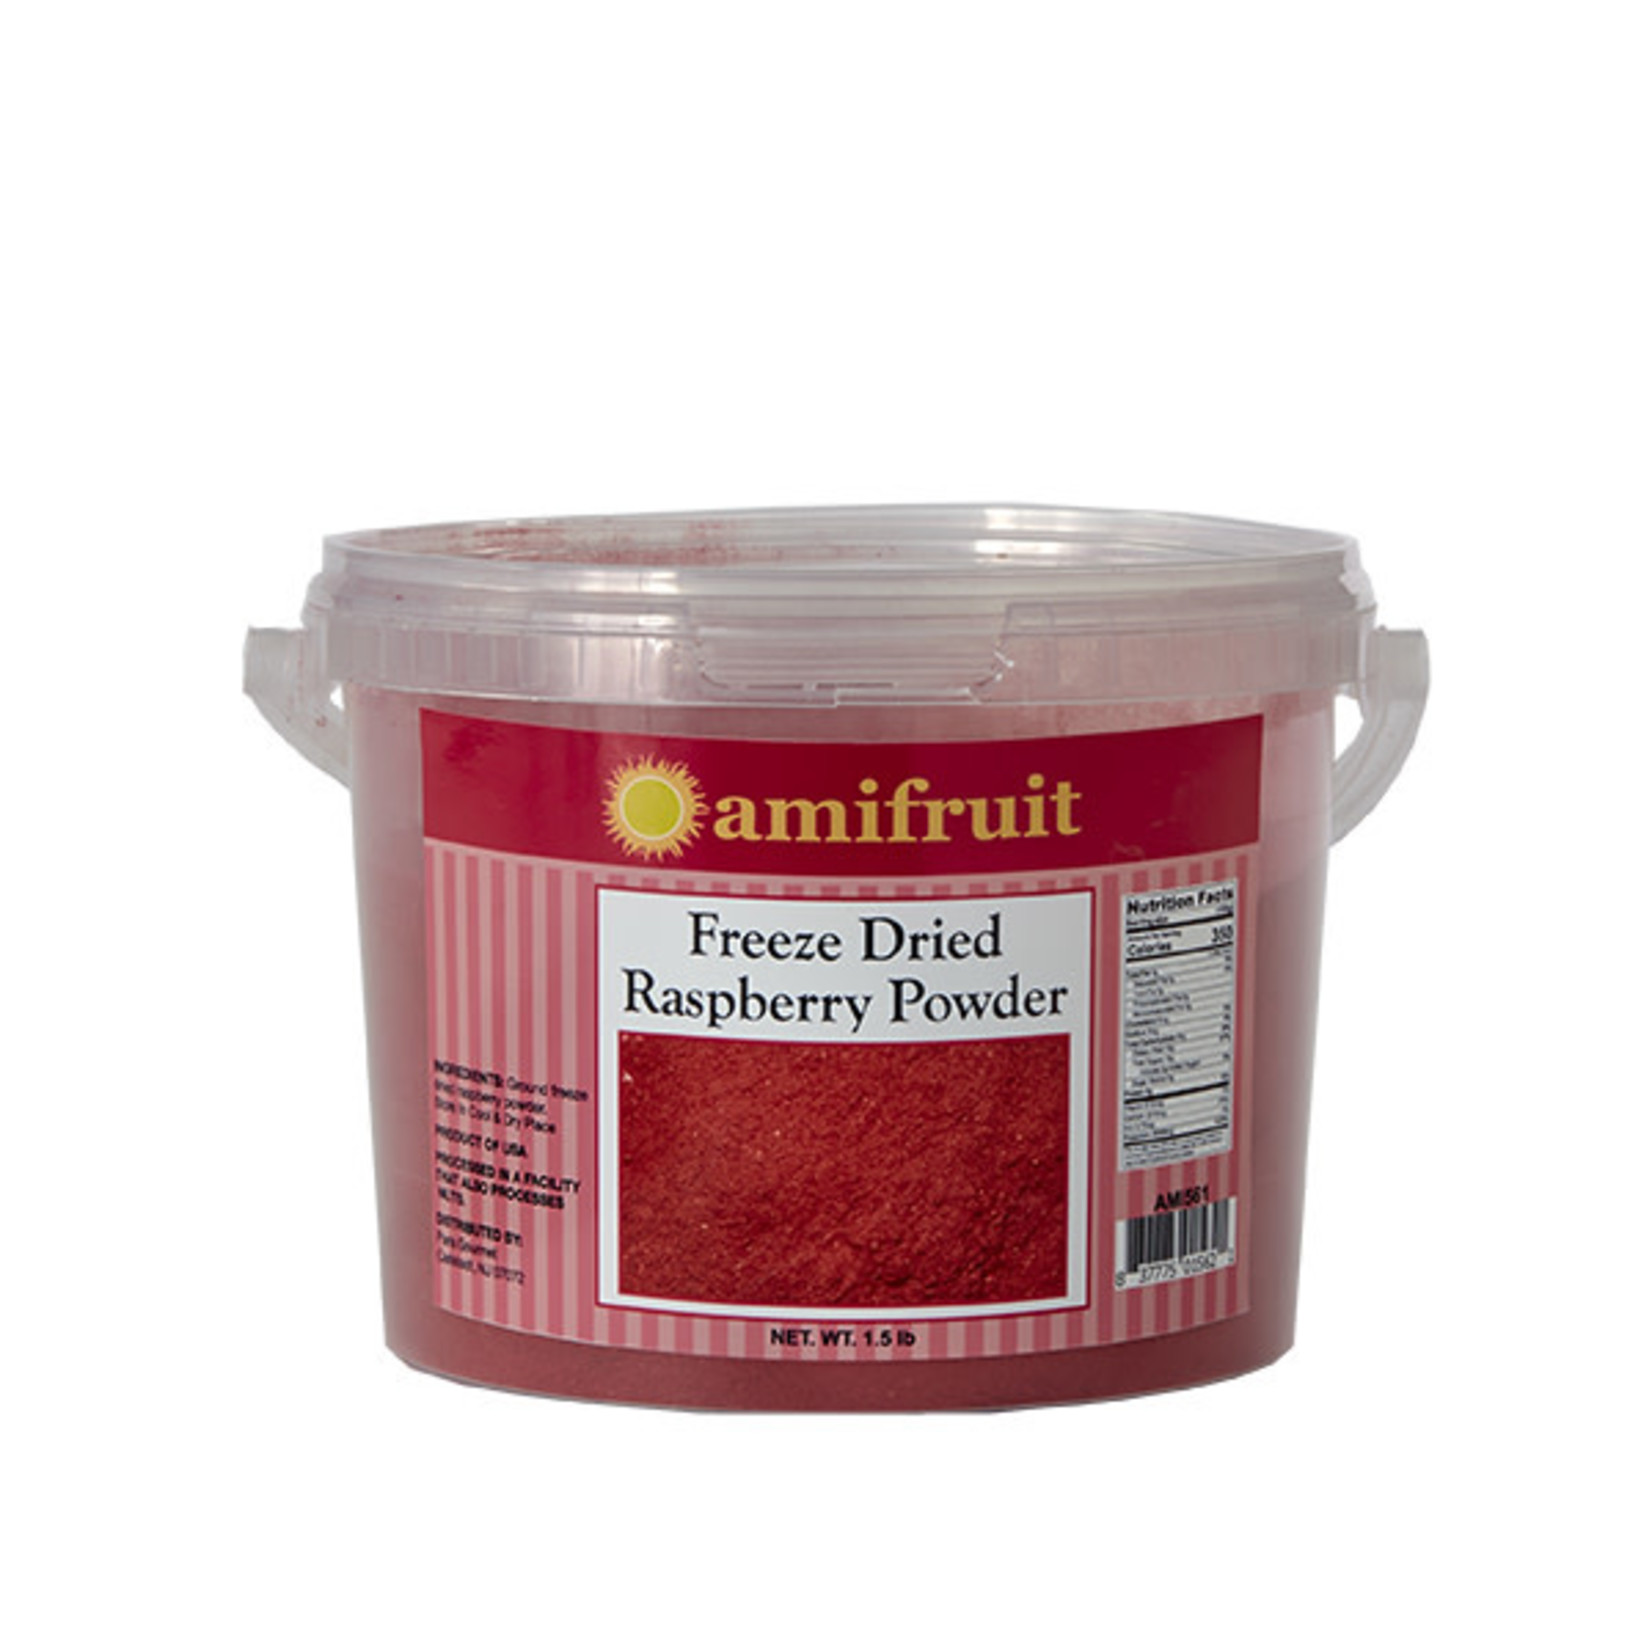 Amifruit Amifruit - Freeze Dried Raspberry Powder - 1.5 lb